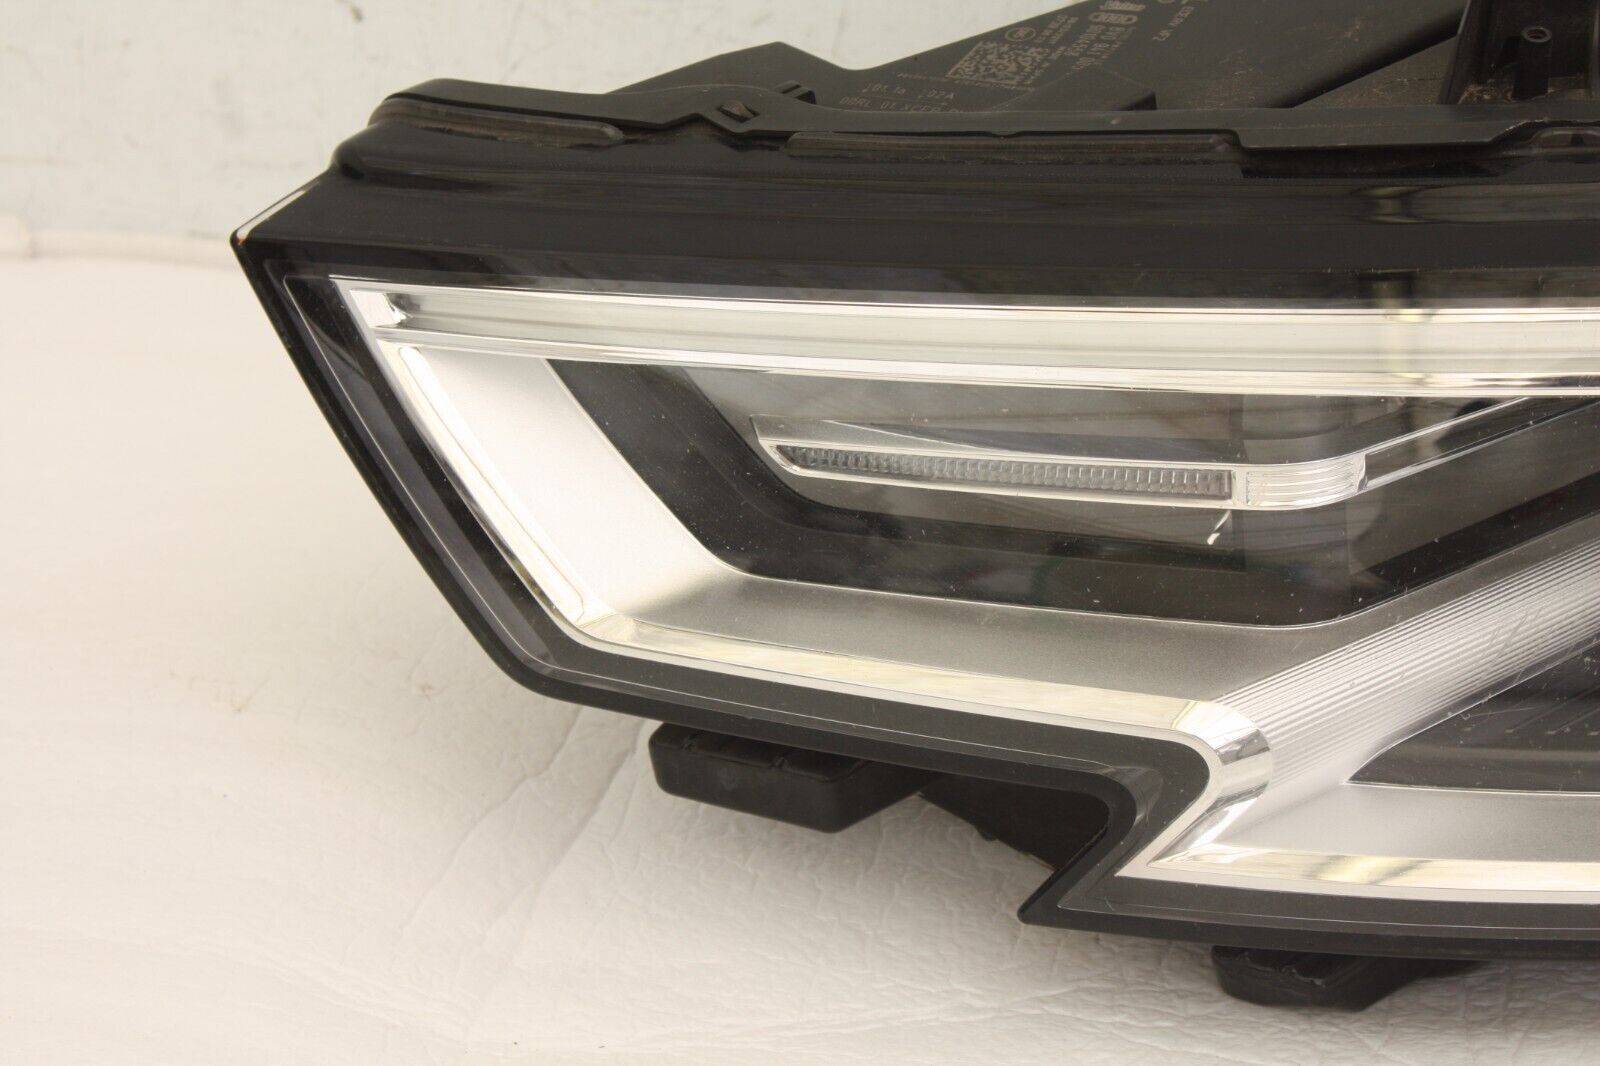 Audi-A3-Left-Side-Xenon-Headlight-8V0941005F-Genuine-ONE-LUG-DAMAGED-176369741688-3